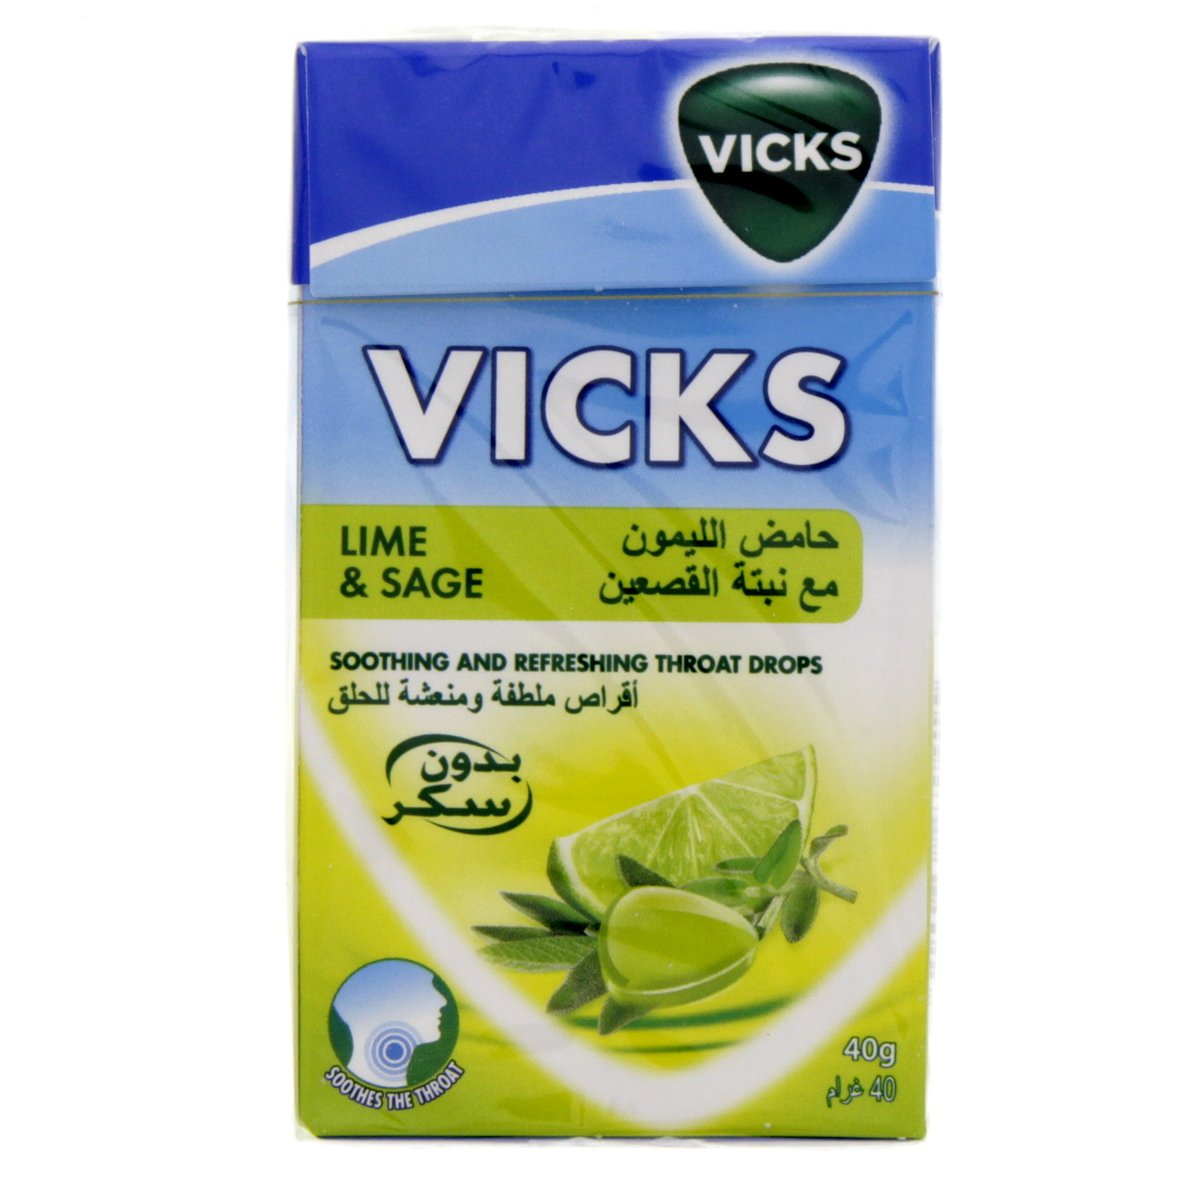 Vicks Lime & Sage Throat Drops 40 g